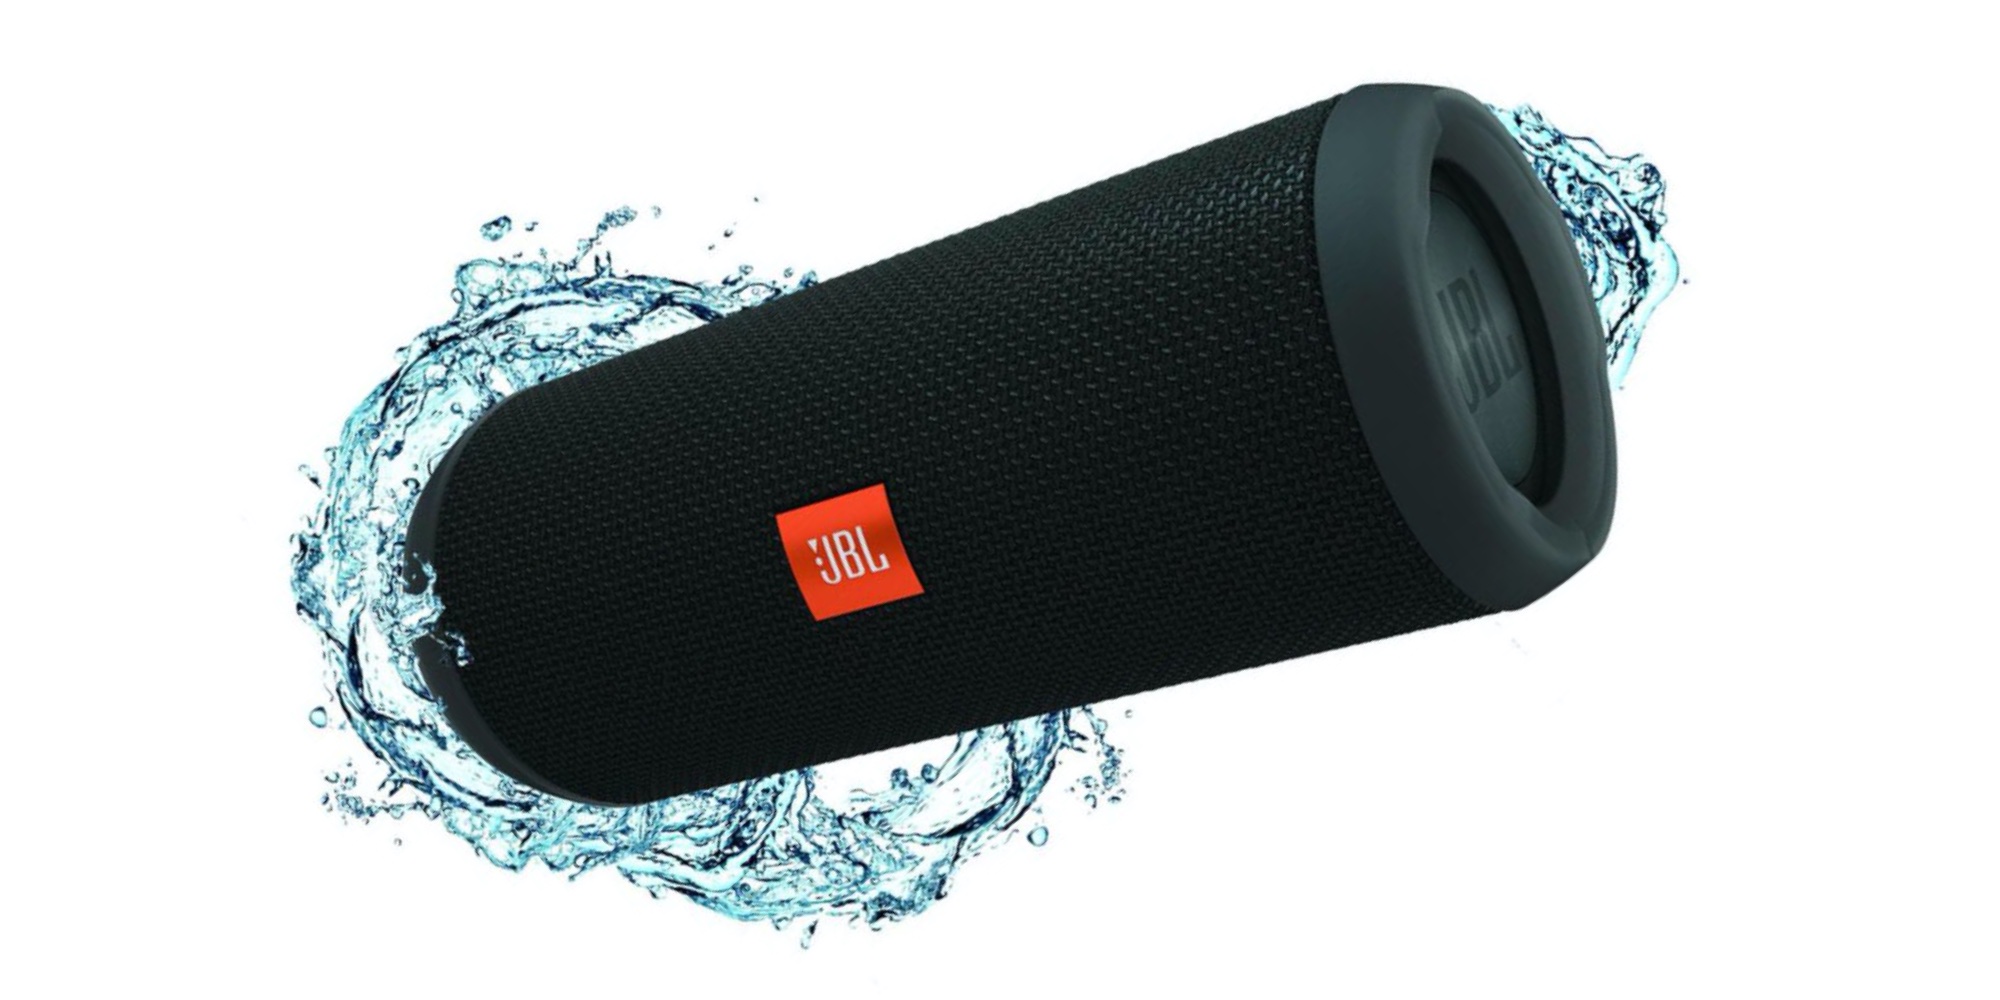 Smartphone Accessories: JBL Flip 4 IPX7 Speaker $60 off),